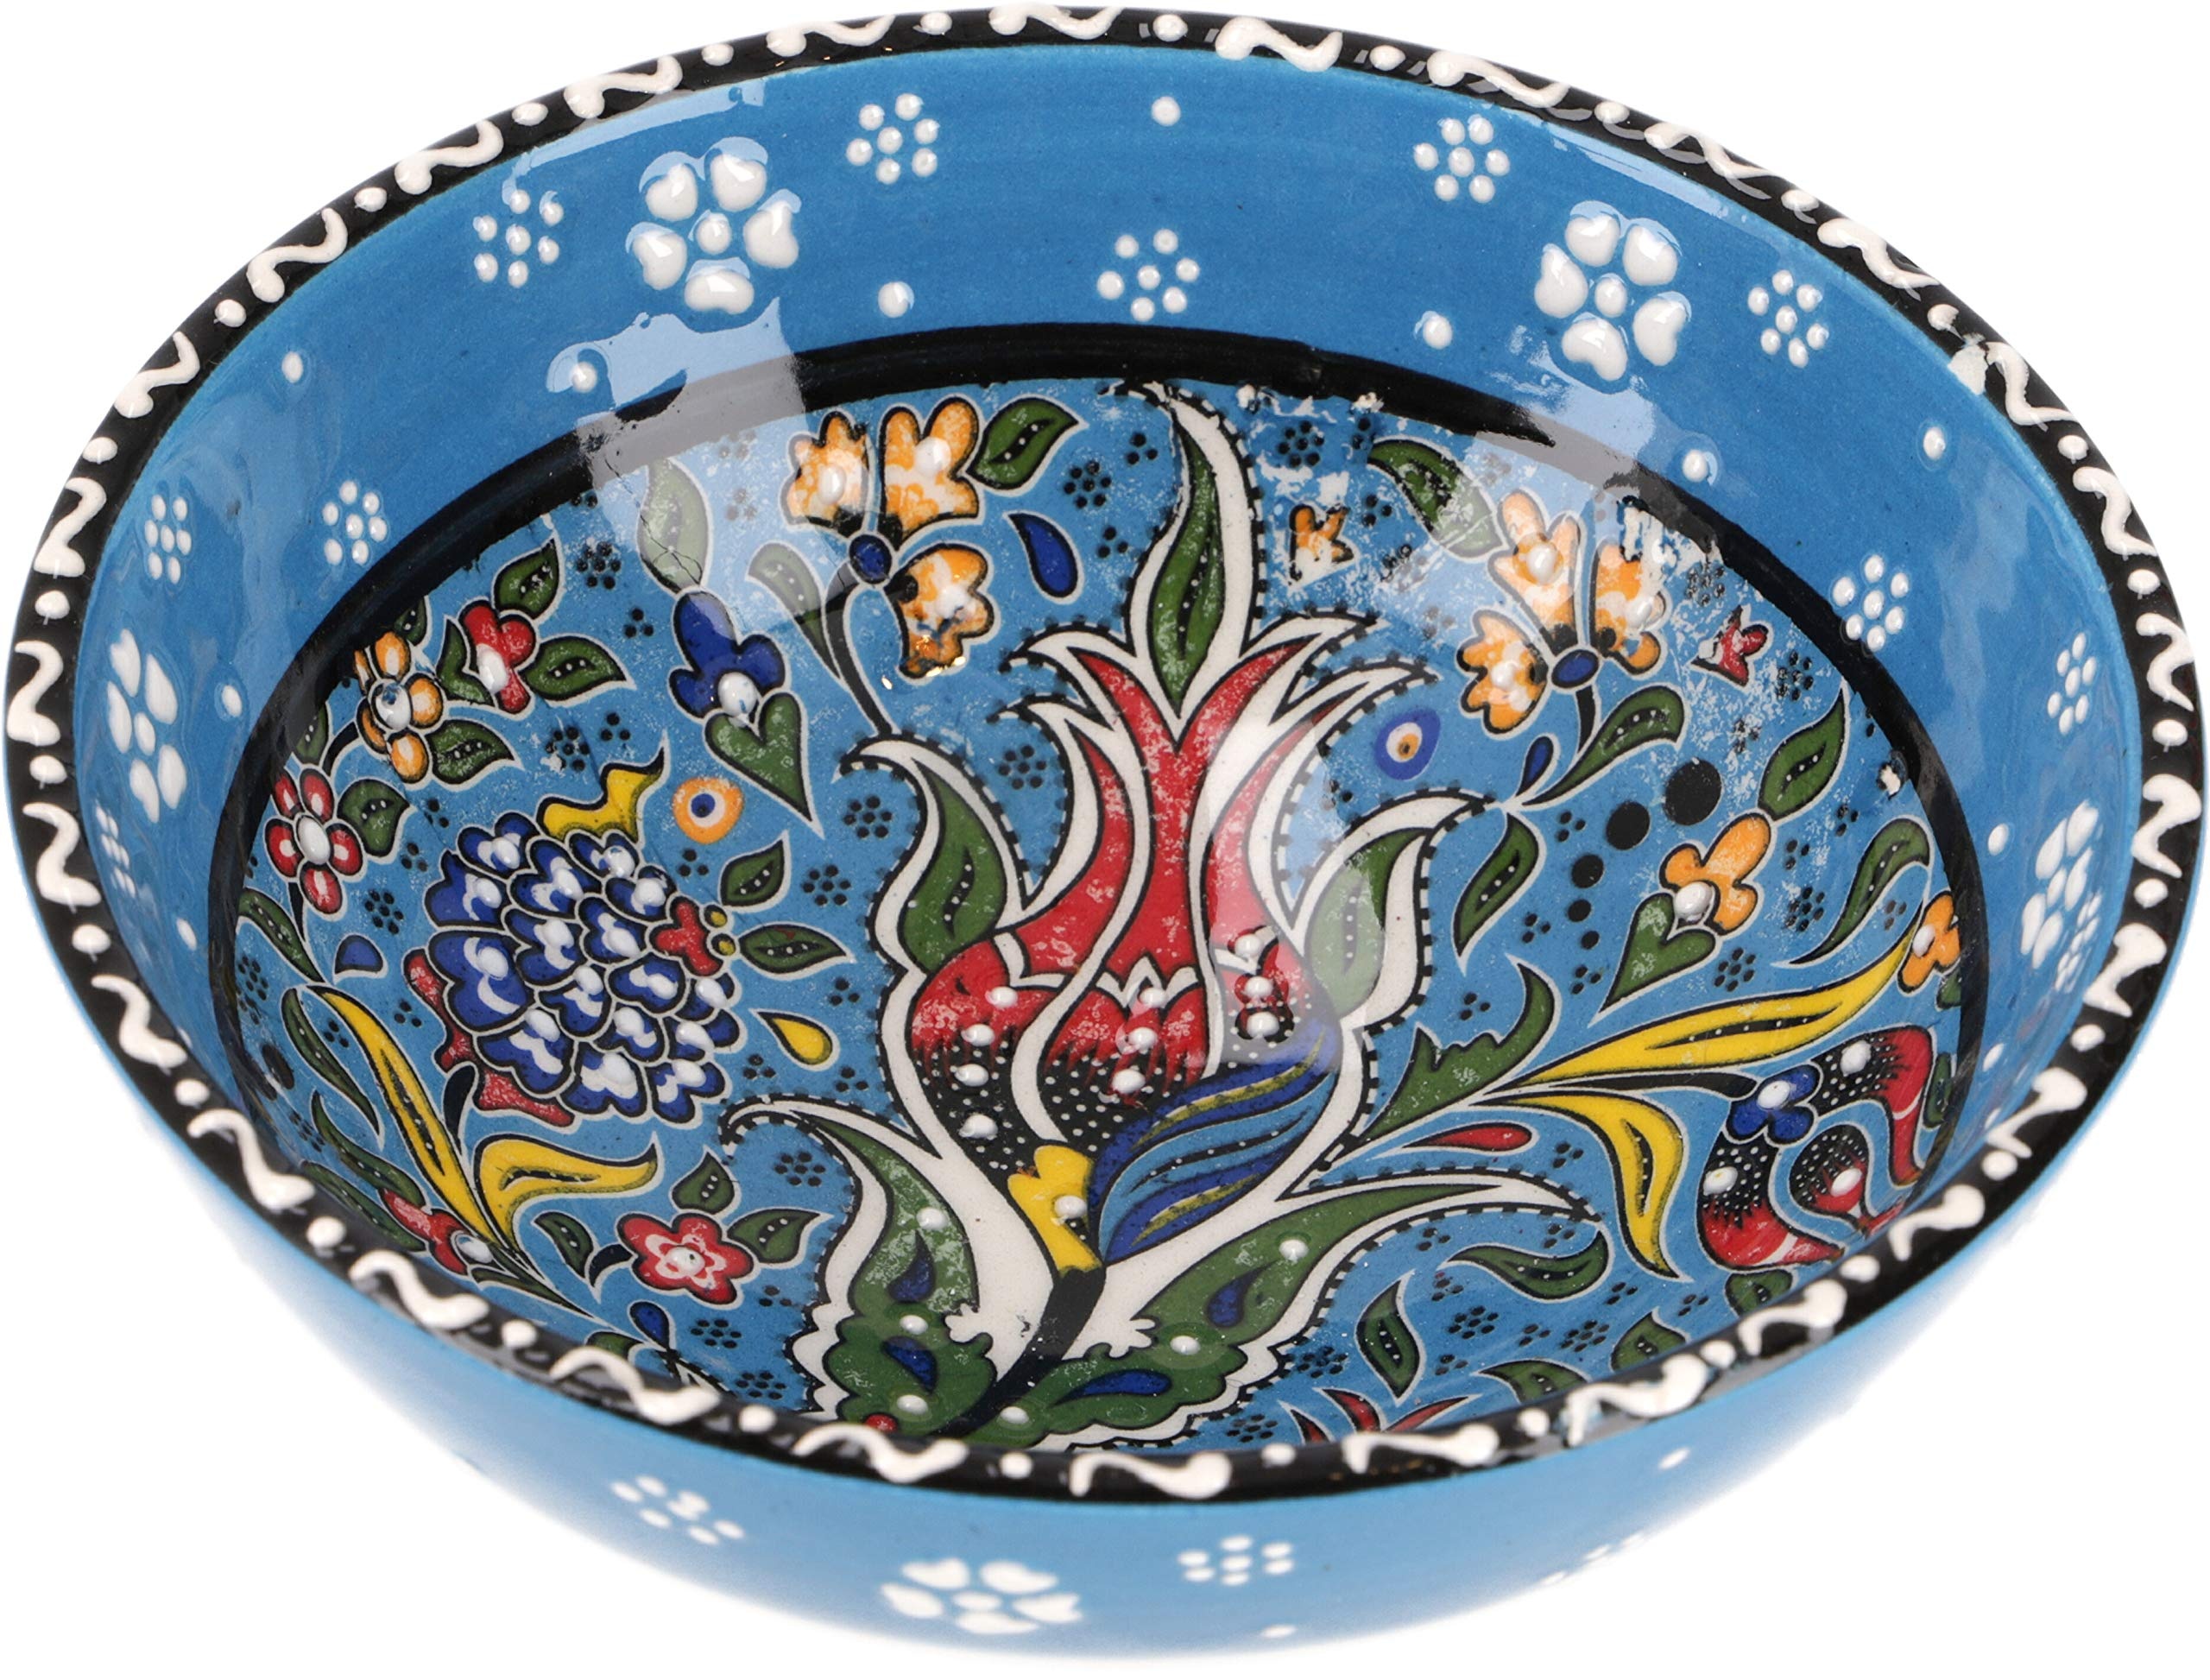 GURU SHOP 1 Stk. Orientalische Keramikschüssel, Schale, Dekoschale, Handbemalt - Ø 12 cm/Modell 24, Blau, Schalen